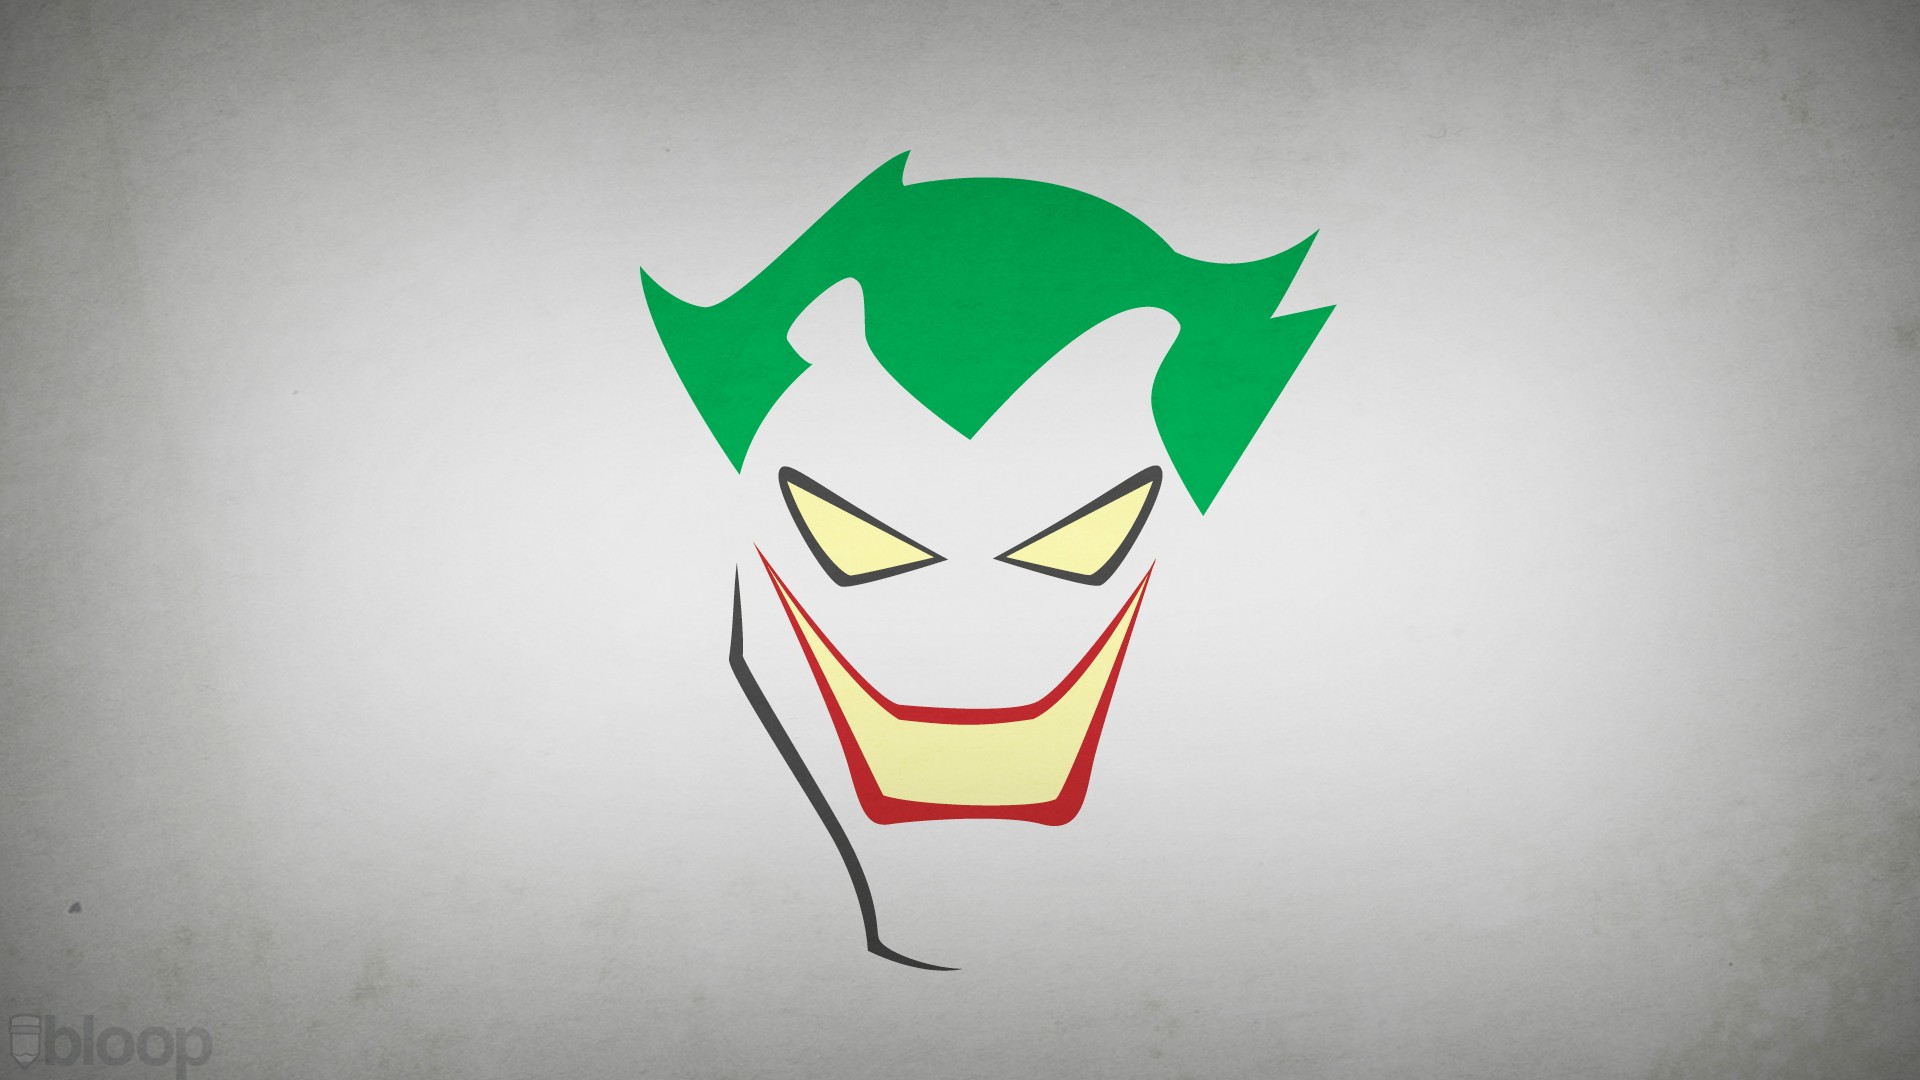 An artistic drawing of the Joker from DC's Batman